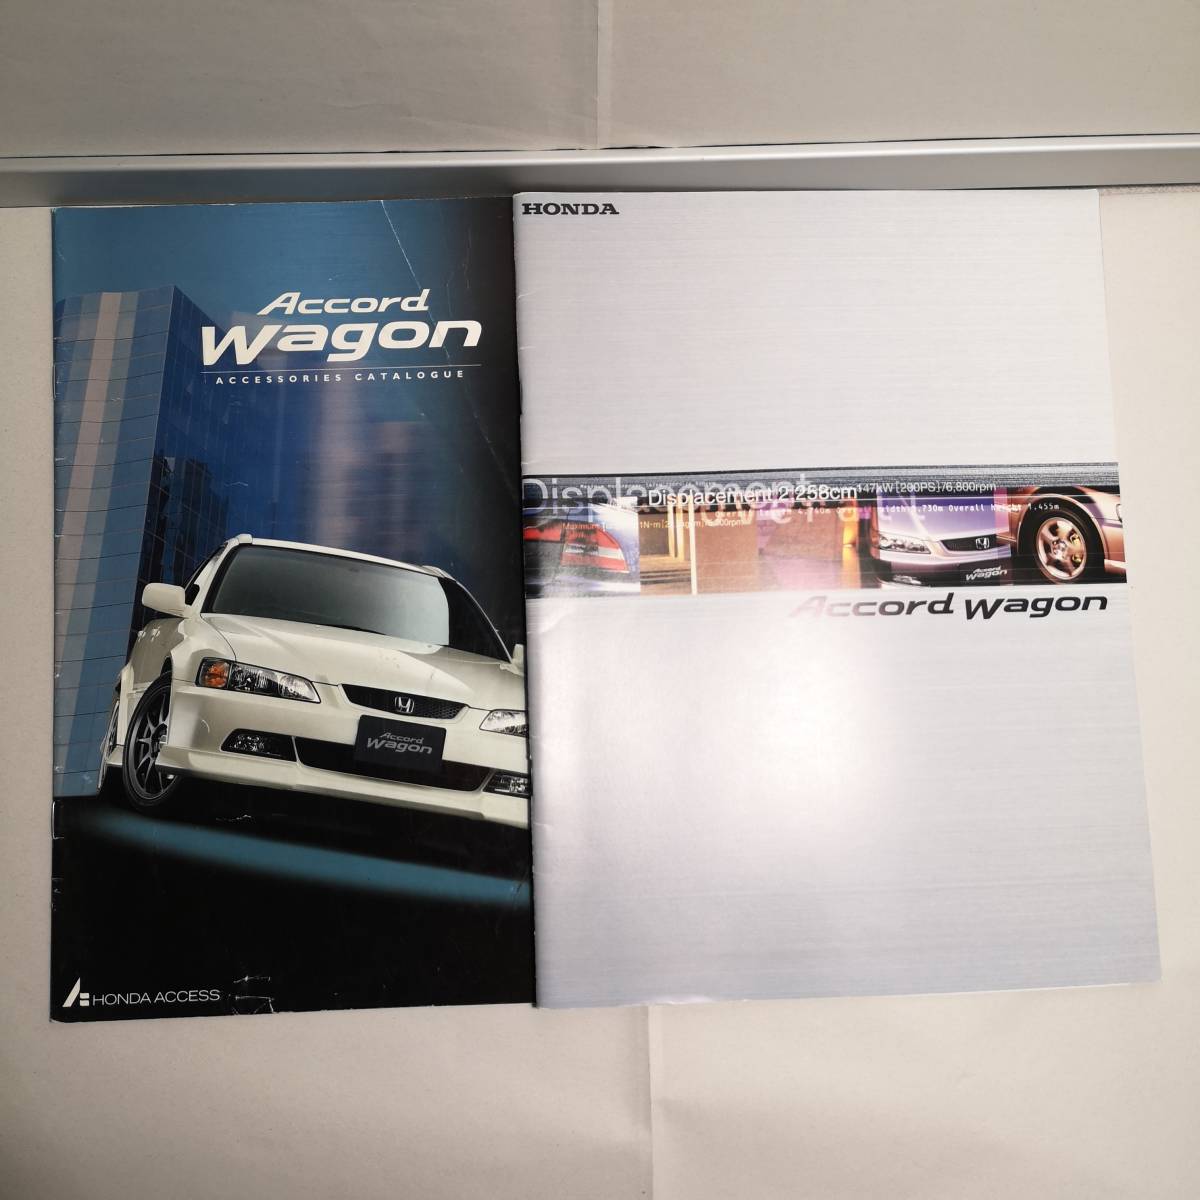 ◆ Honda Accord Wagon Catalog 2000/6 24 Страница ◆ Аксессуары ~ 2000/6 ◎ 20p ◇ 2 Установка копии ◆ Акквардром вагона.